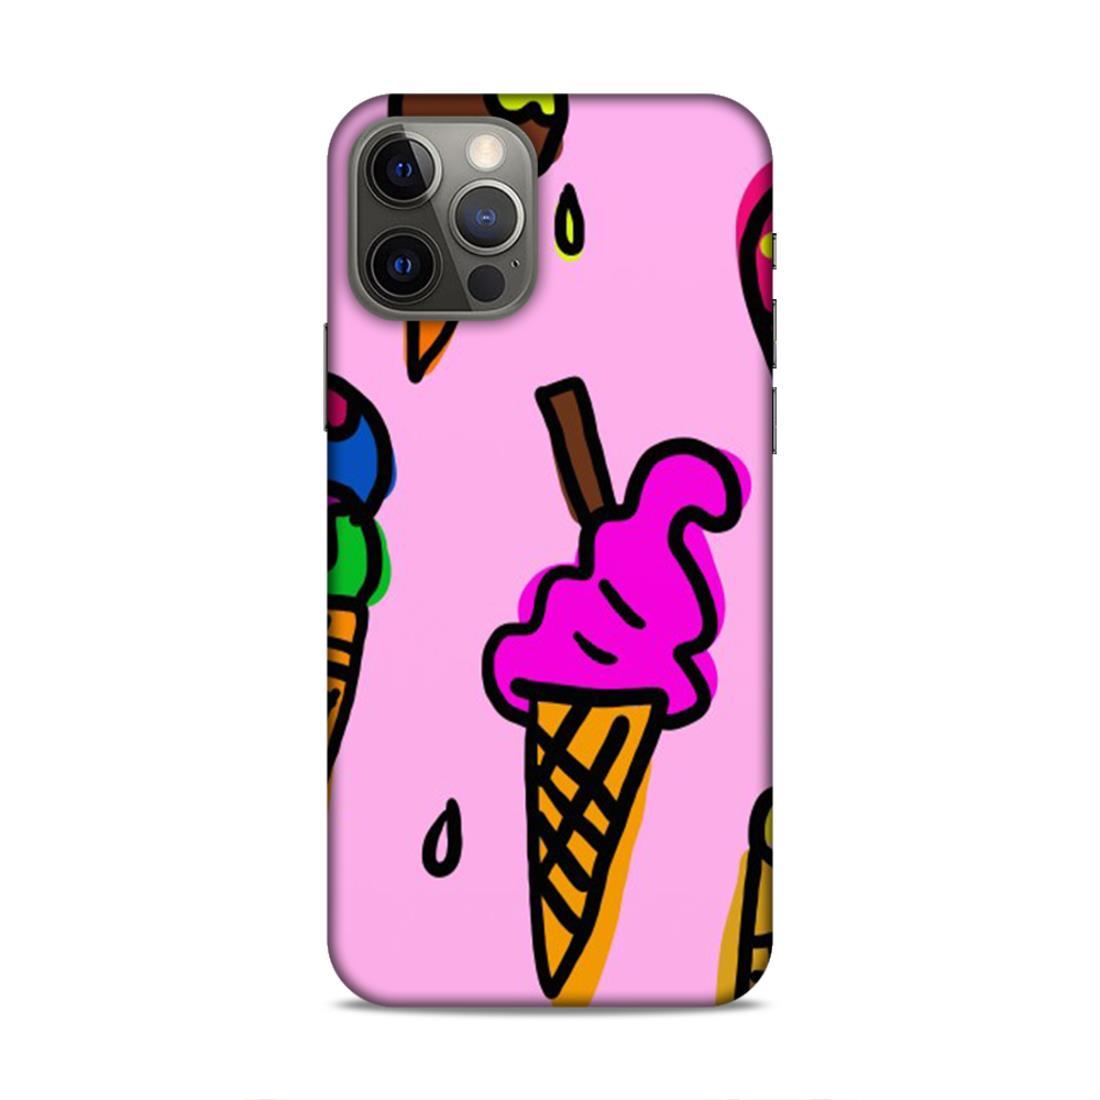 Icecream Pink iPhone 12 Pro Phone Cover